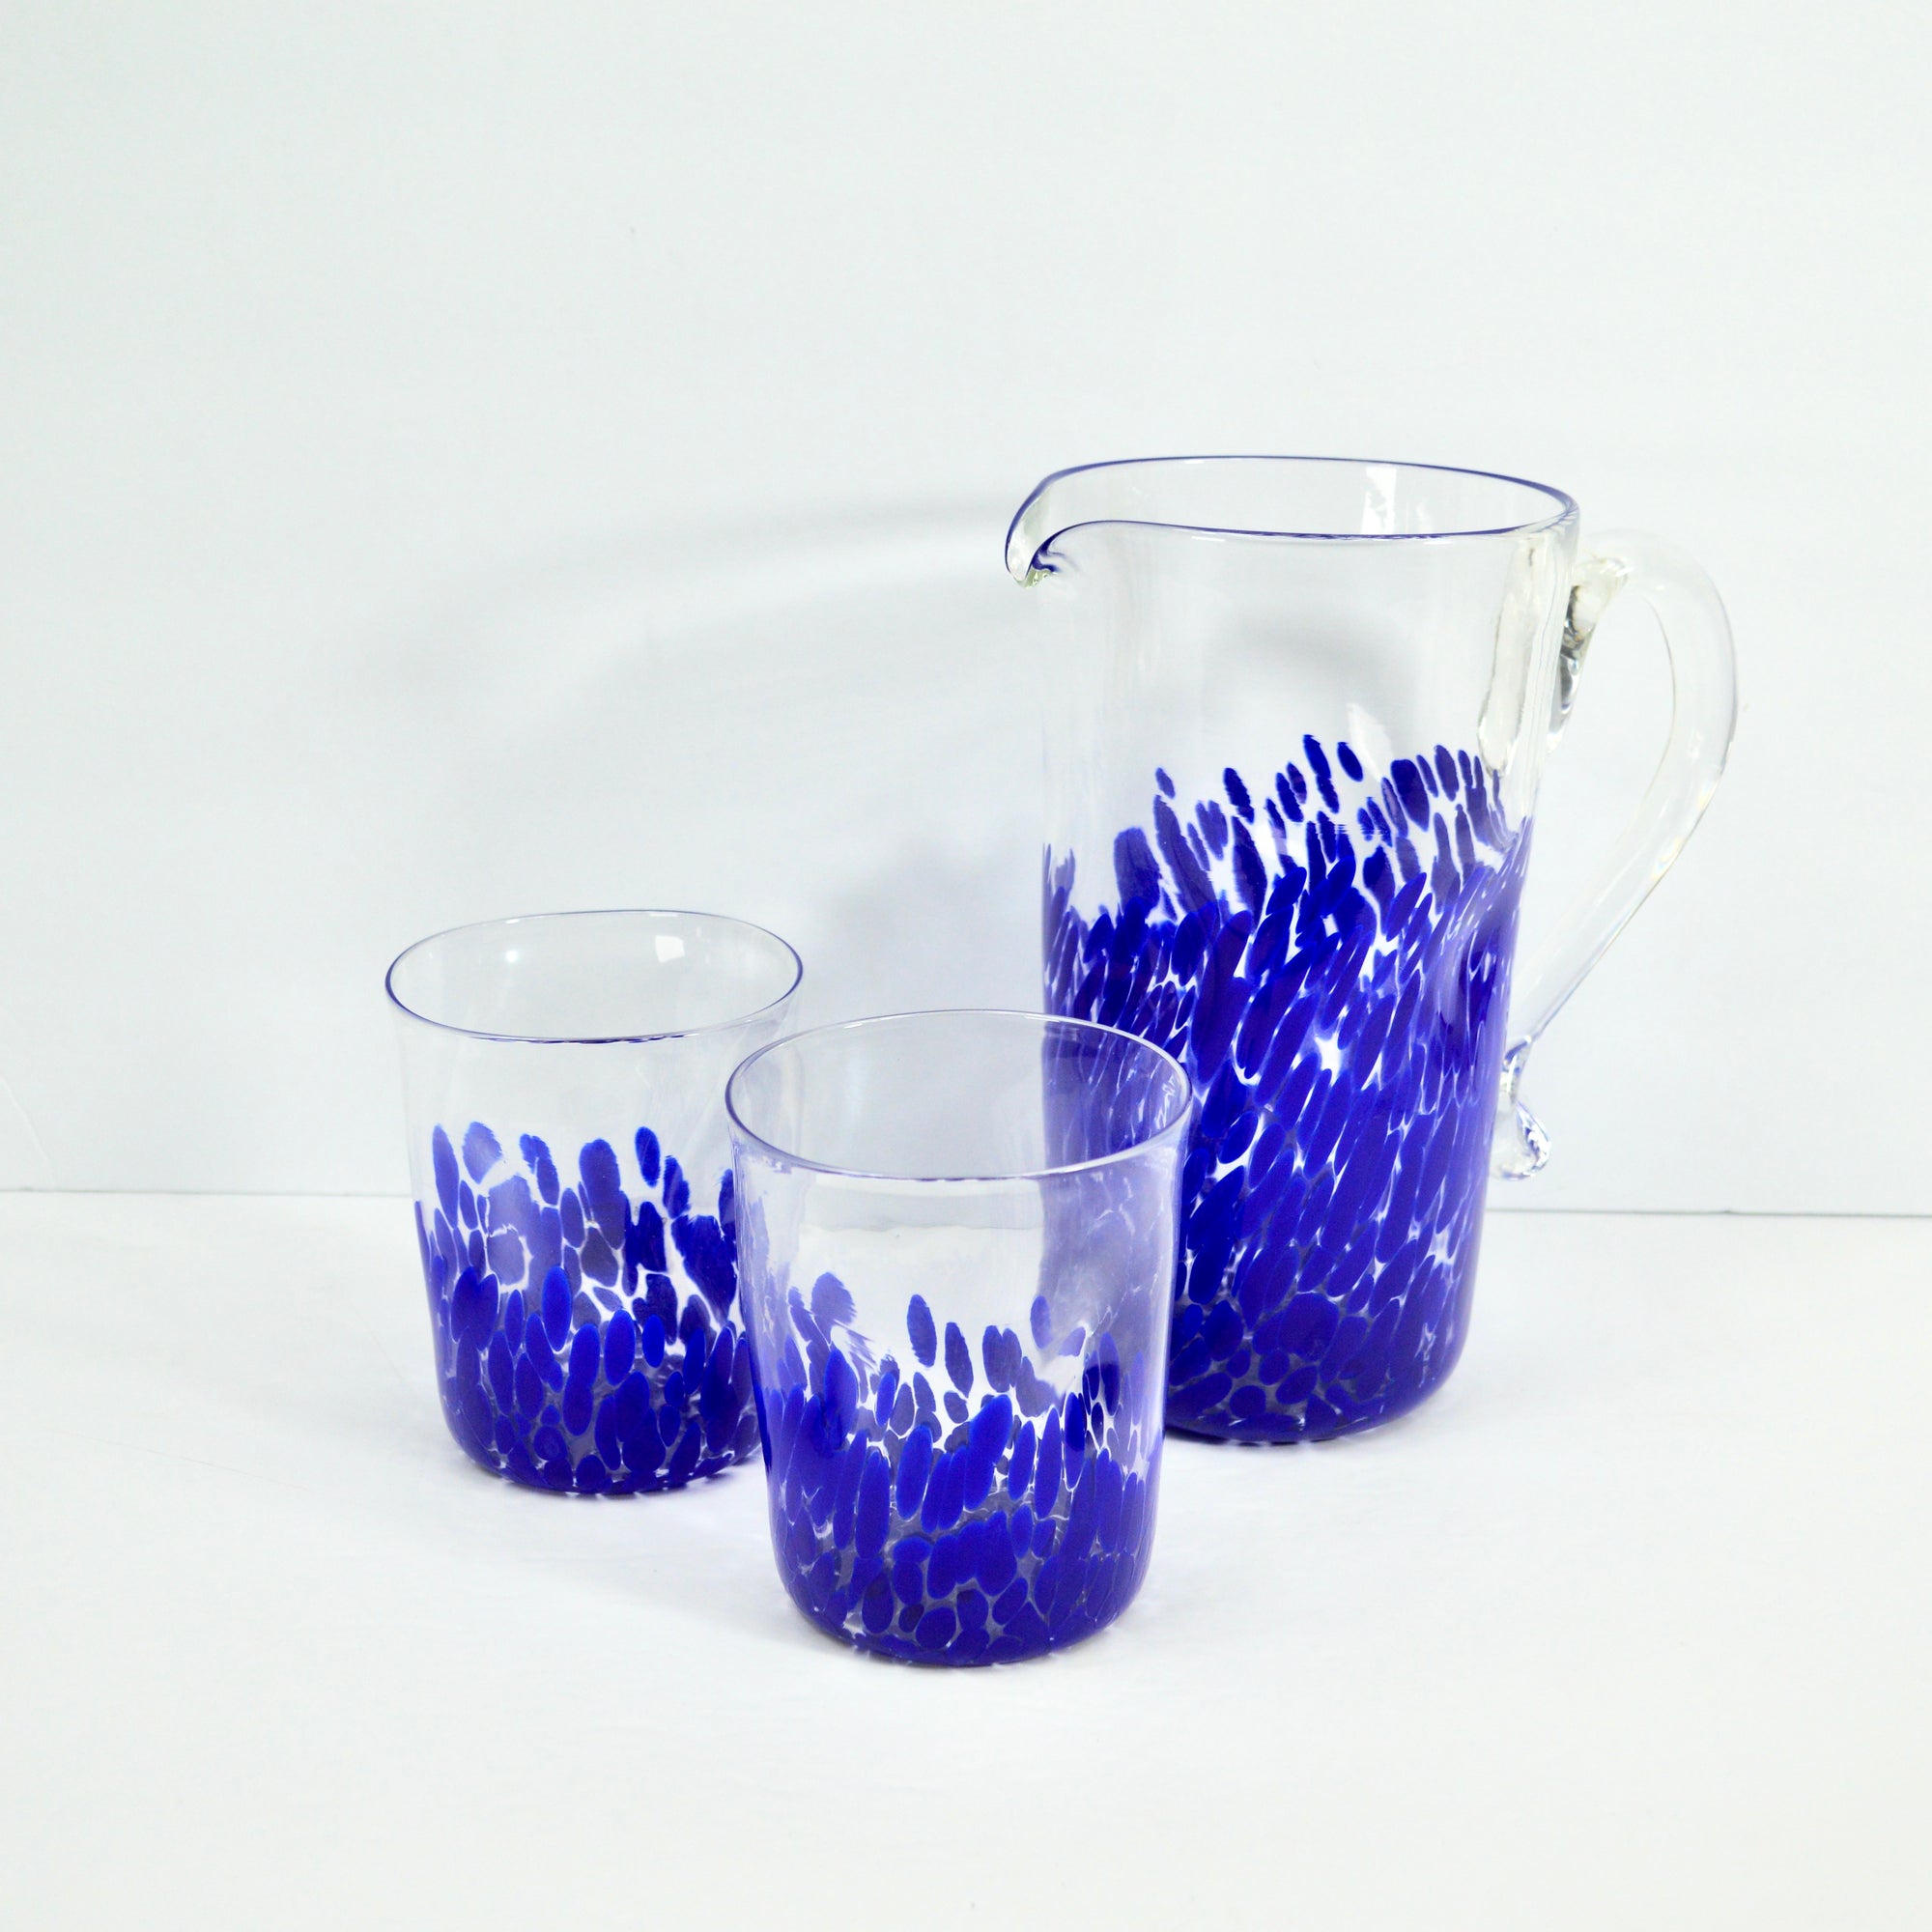 Handblown Recycled Glass Tumbler Drinkware (Set of 6) Blue - Cobalt Angles